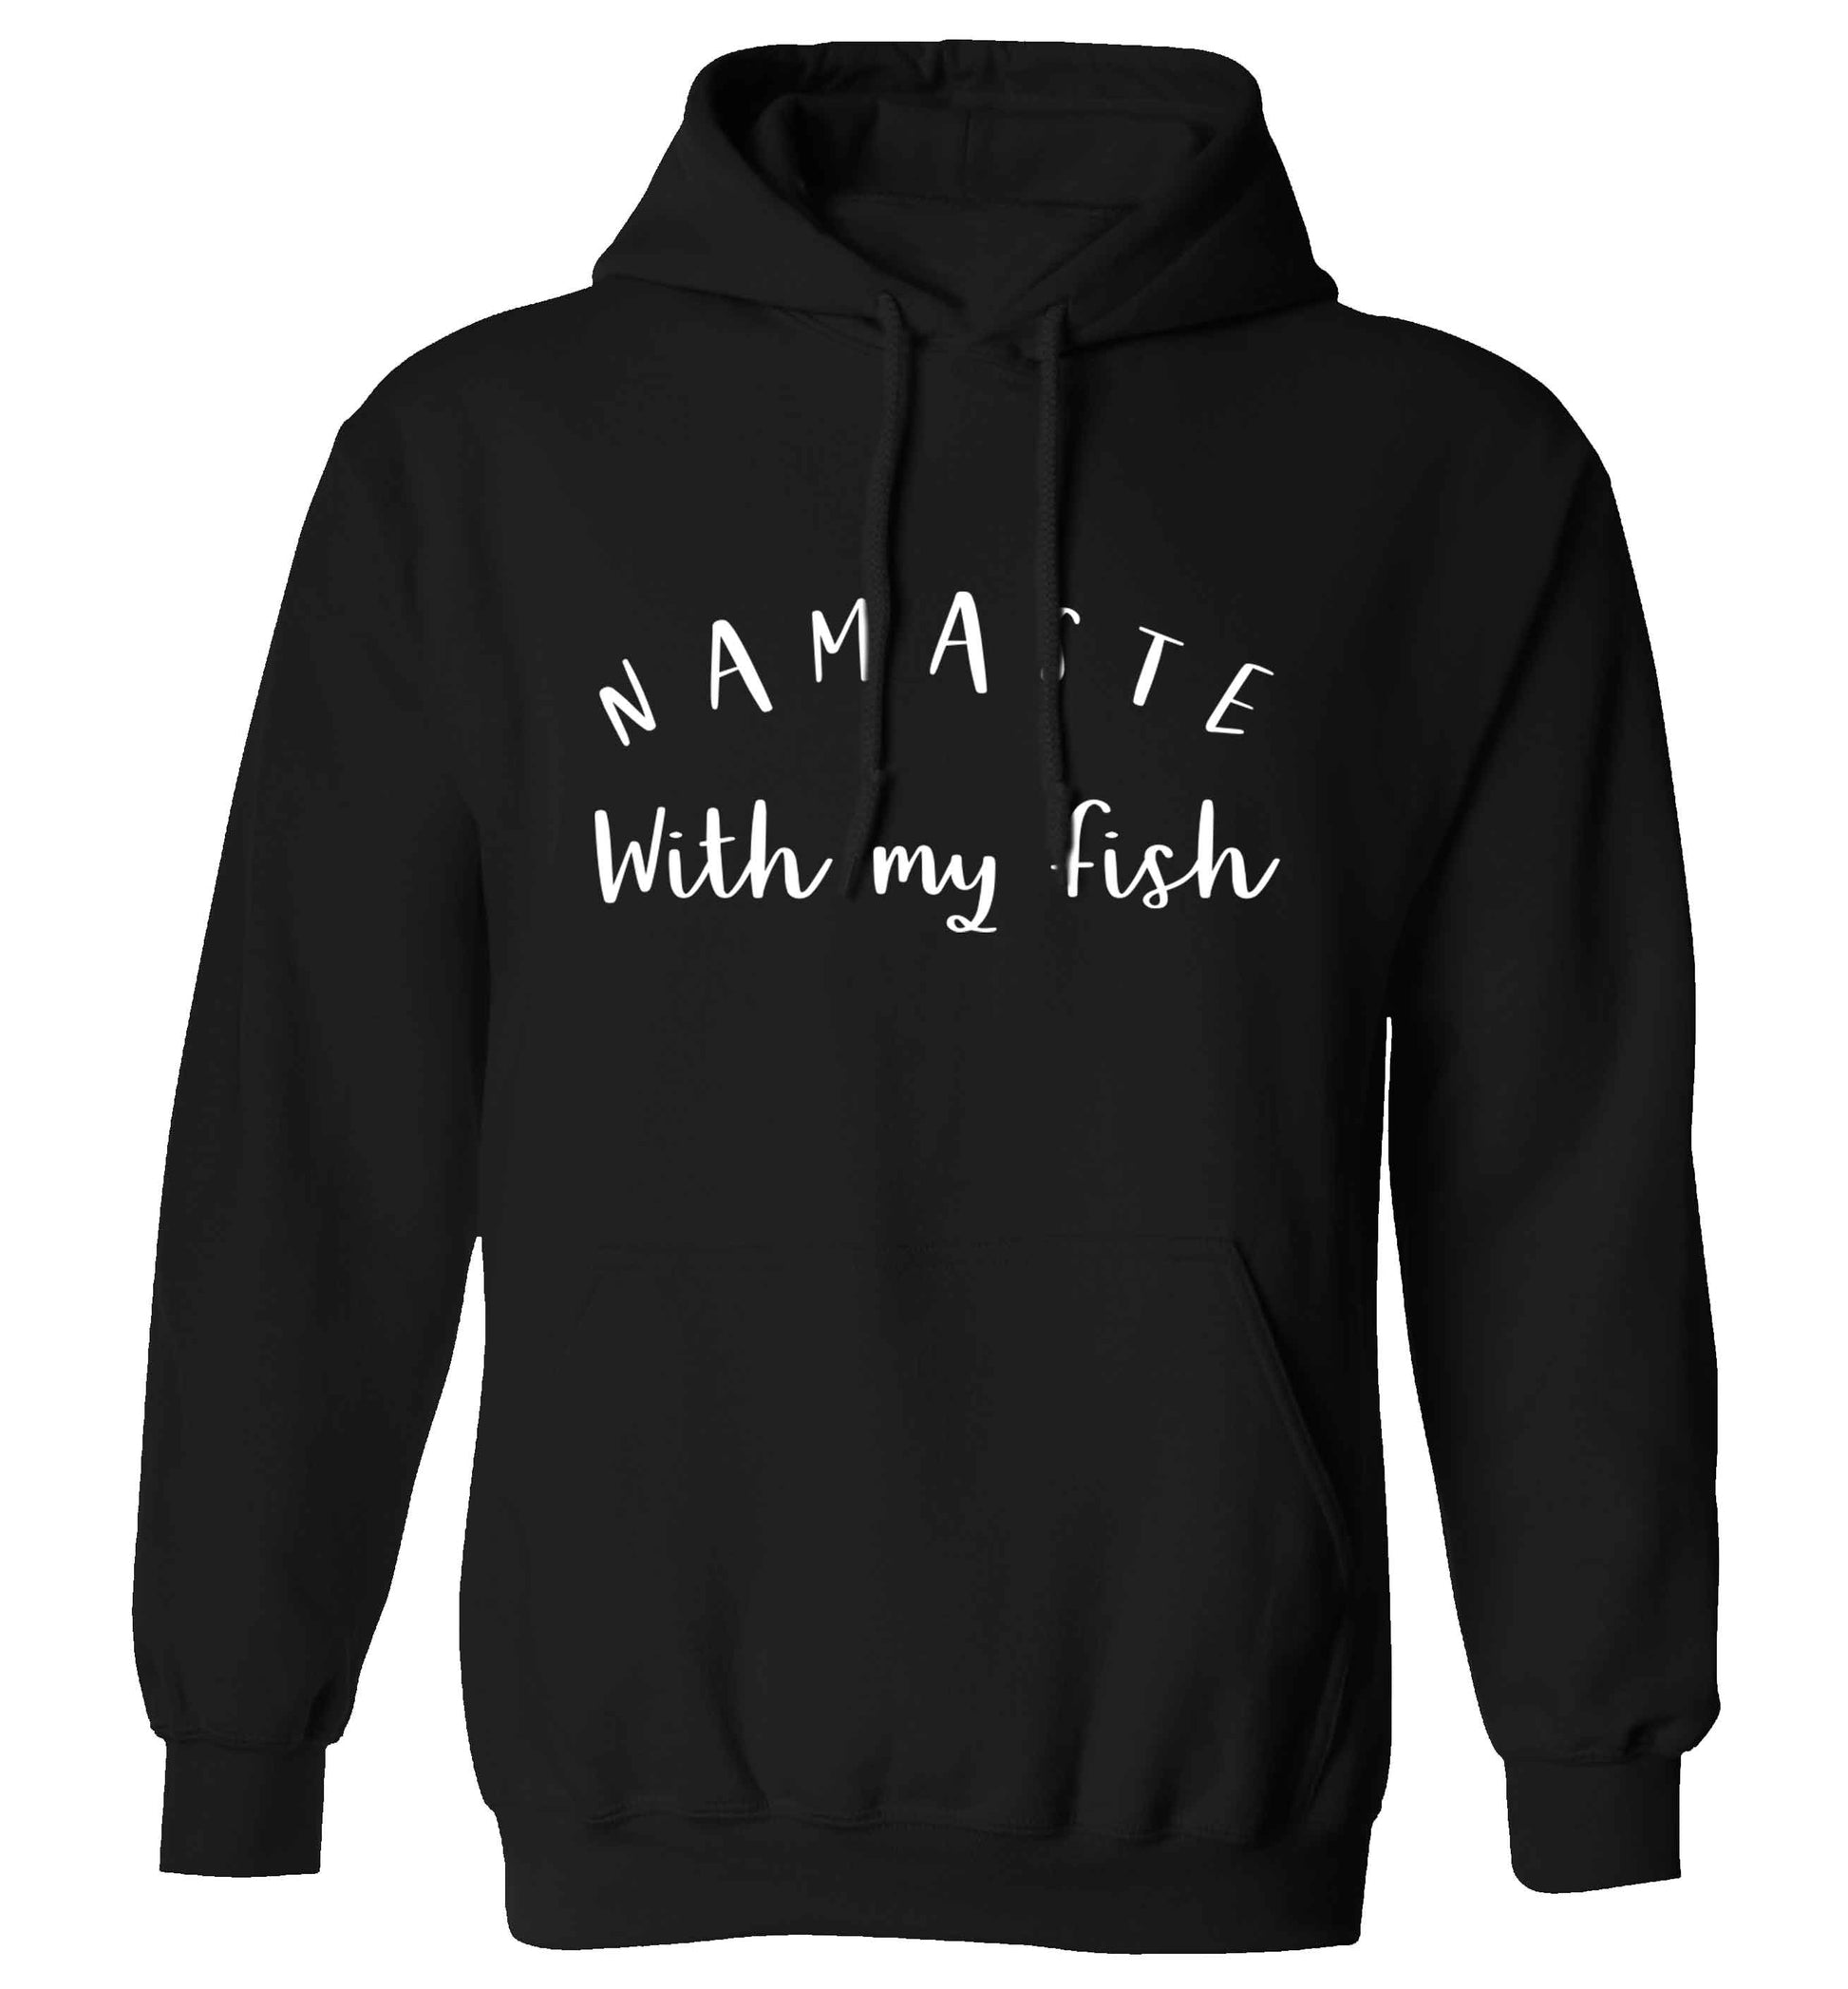 Namaste with my fish adults unisex black hoodie 2XL